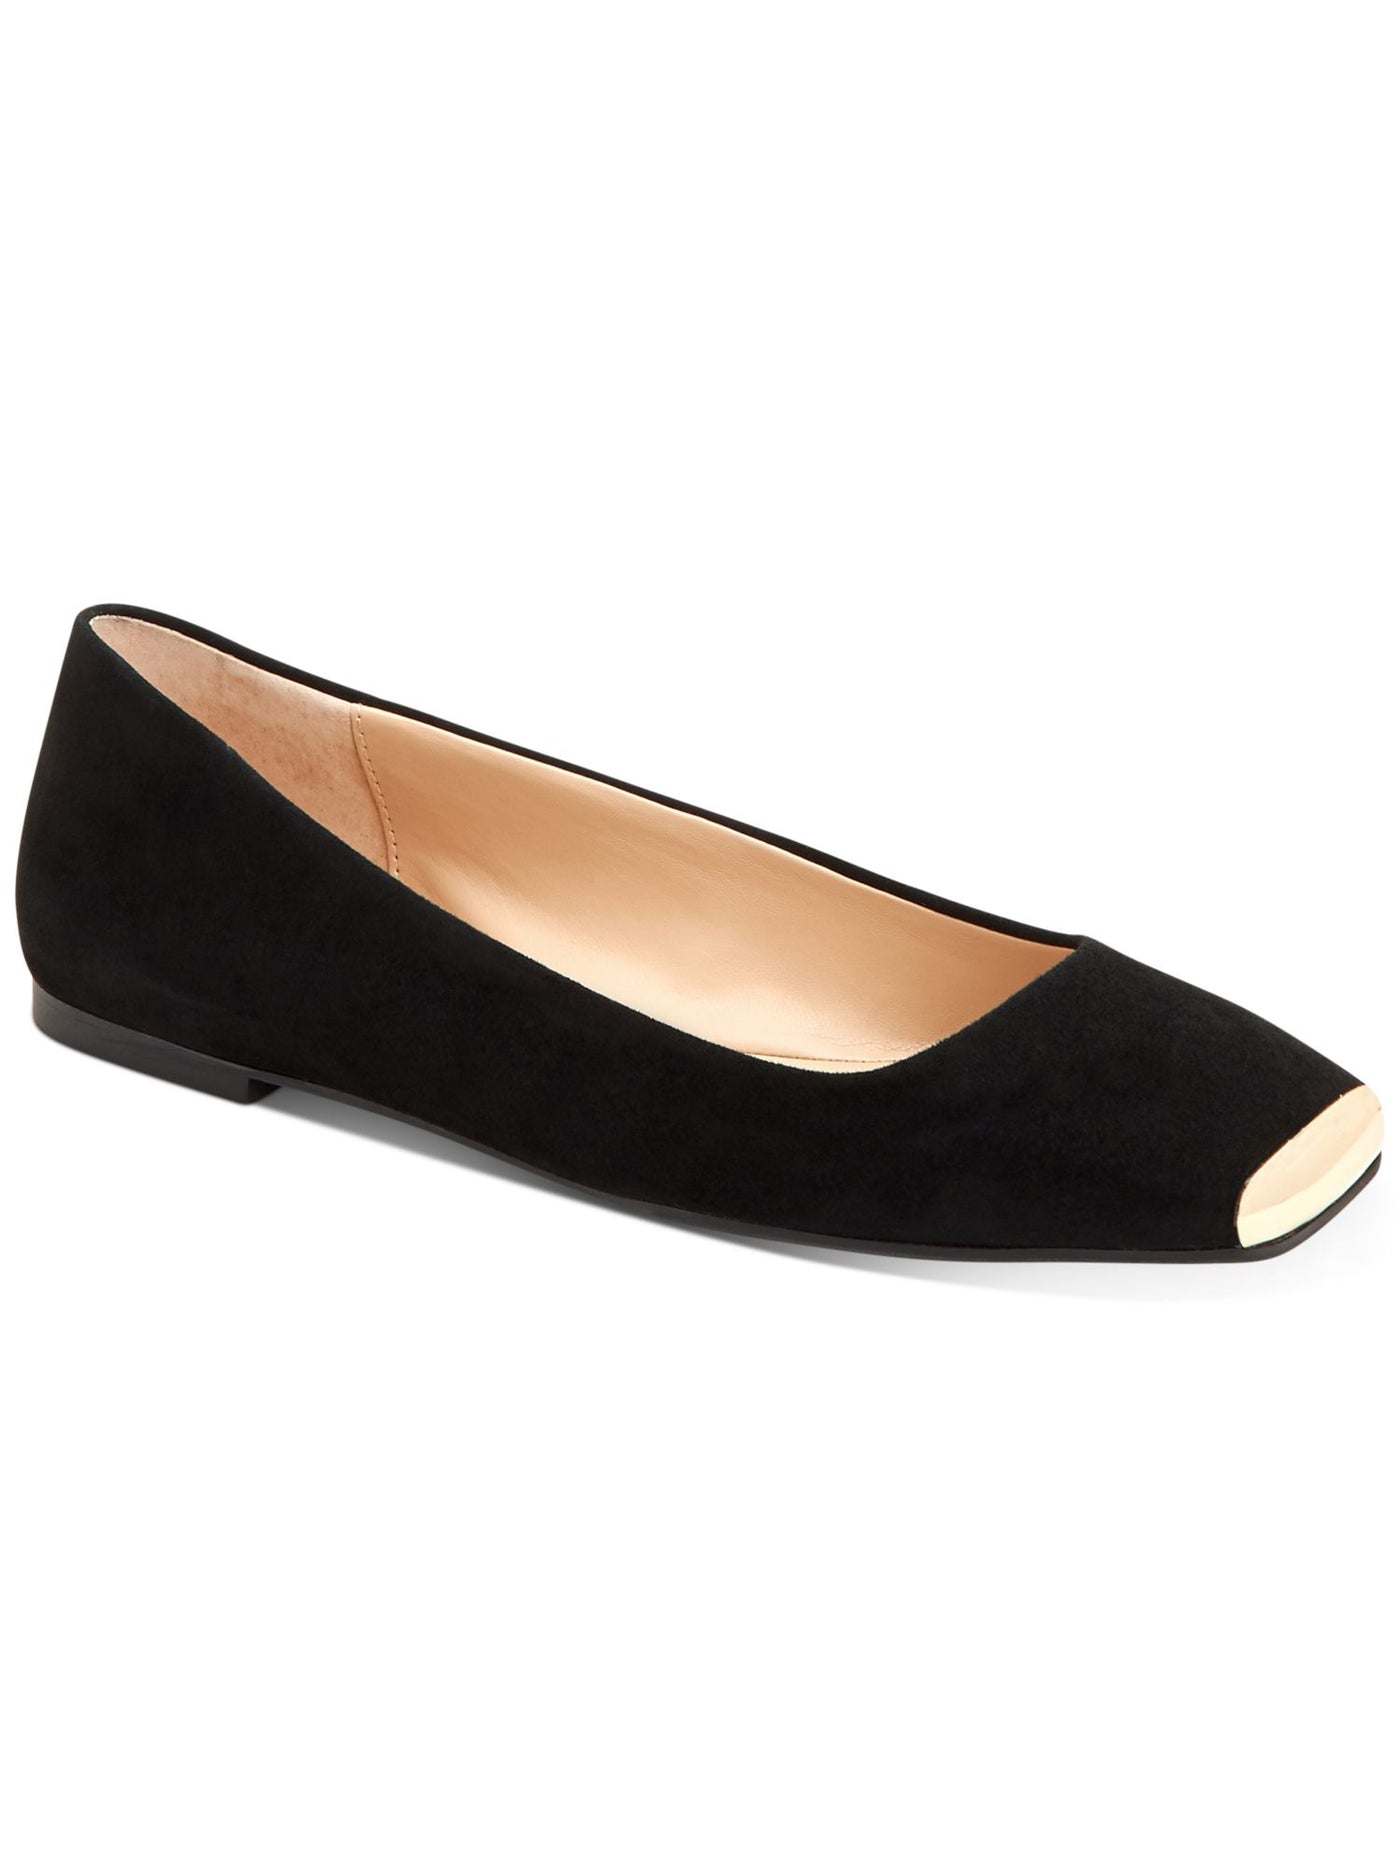 ALFANI Womens Black Comfort Neptoon Square Toe Slip On Leather Flats Shoes 9.5 M